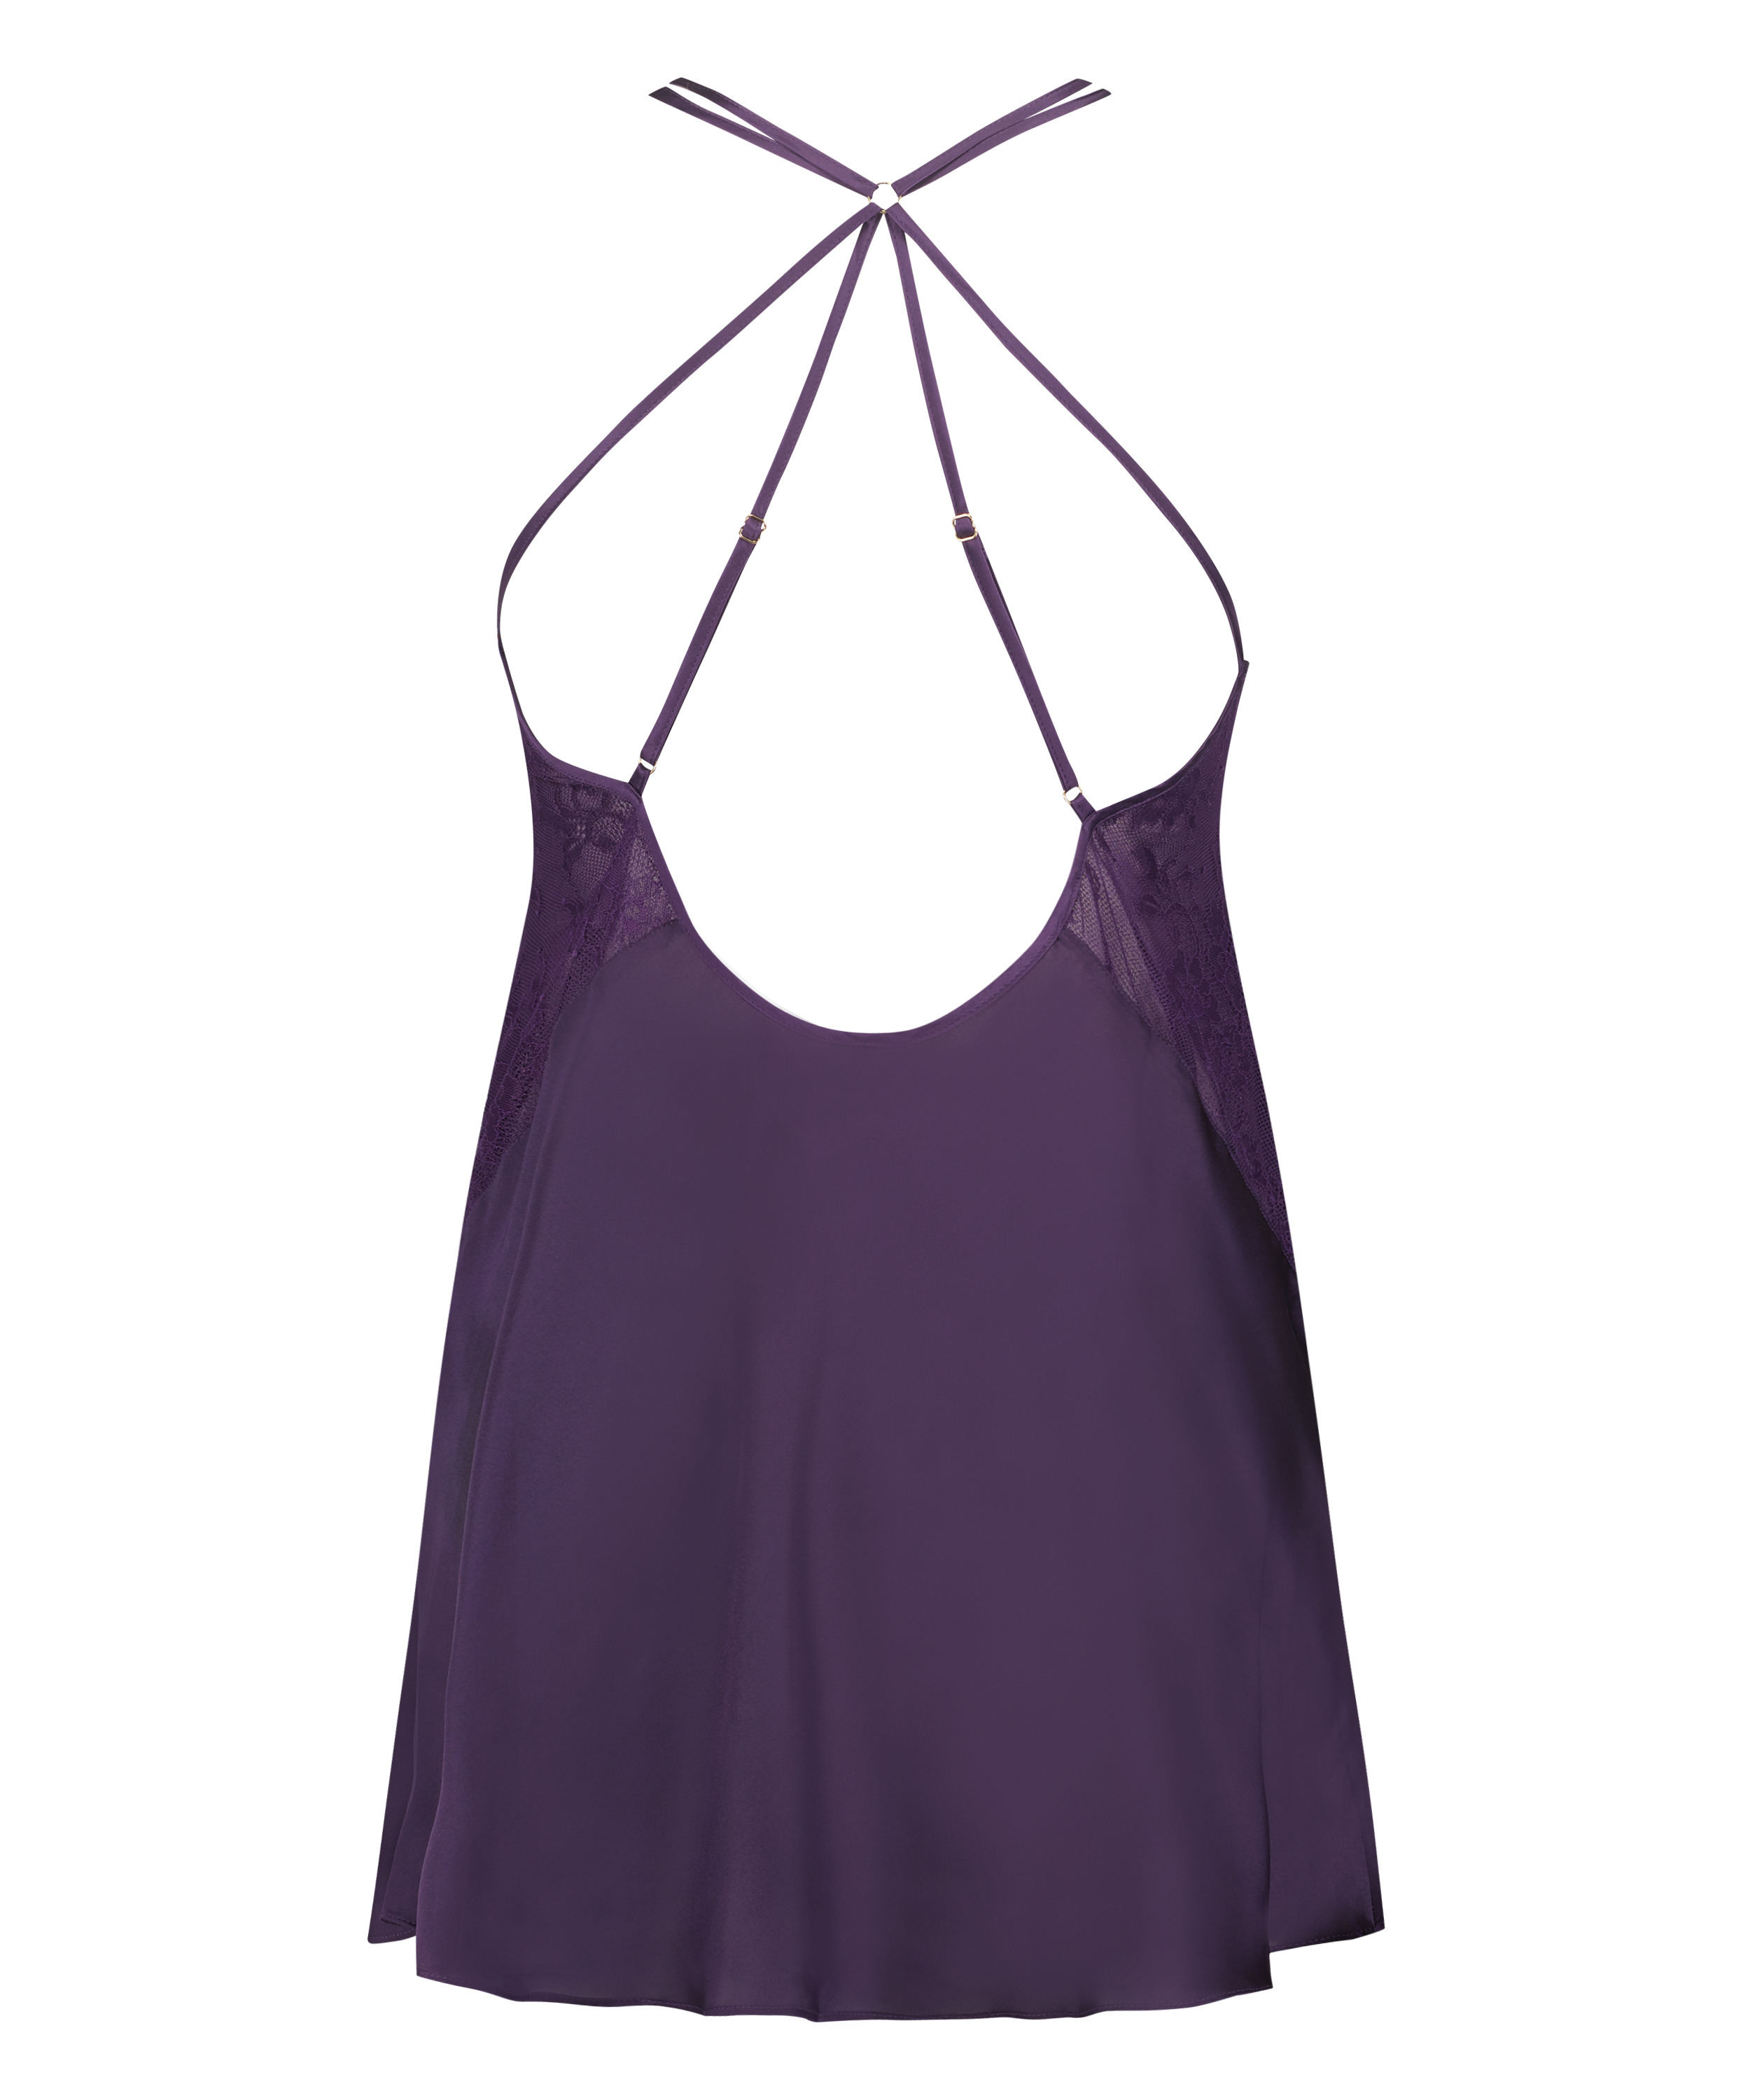 Sienna Lace Slip Dress, Purple, main